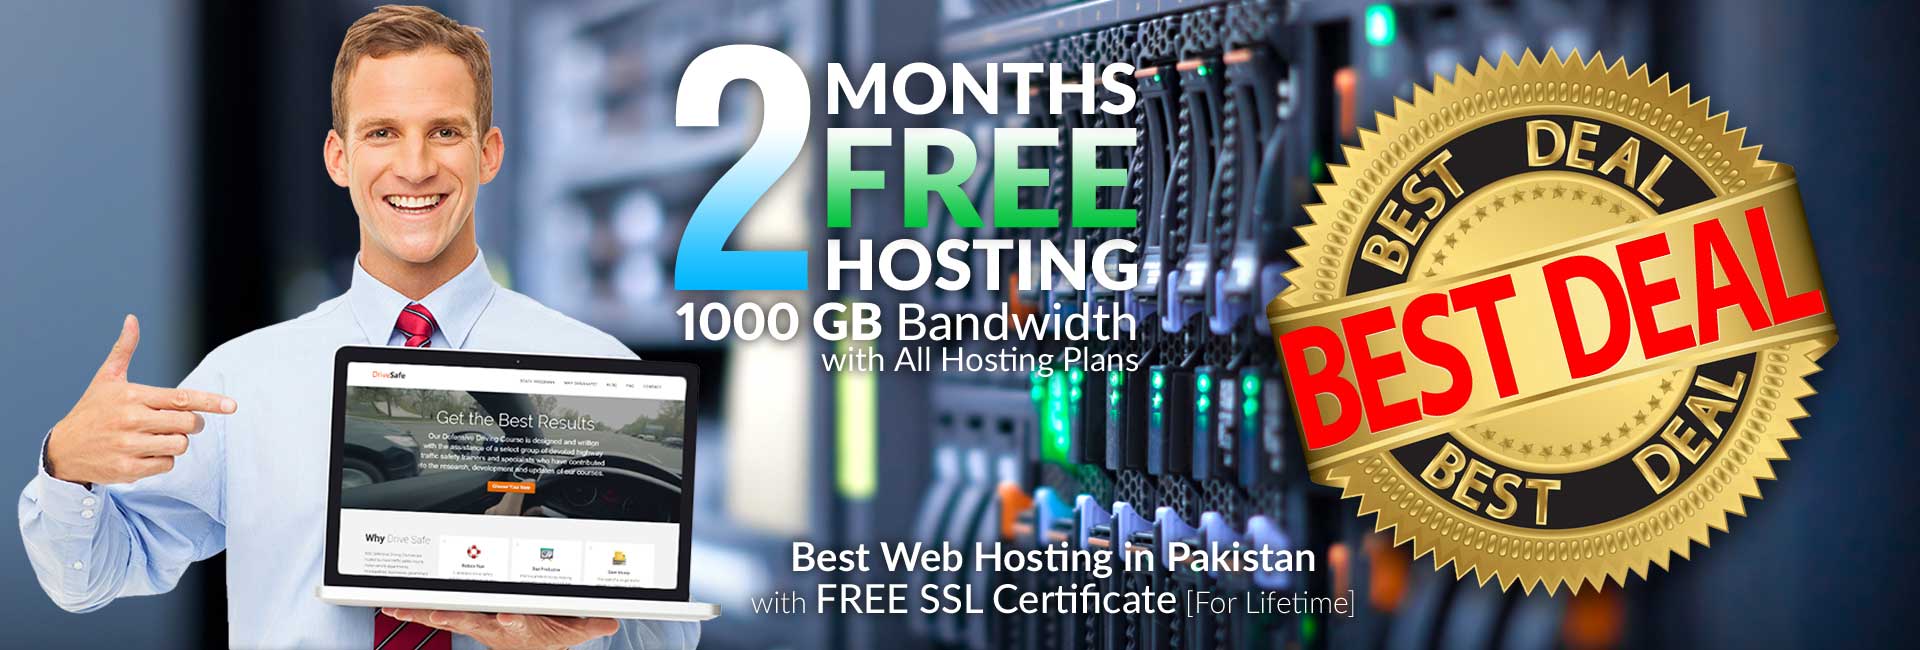 2 Months Free Hosting Best Deal 1000 GB Bandwidth